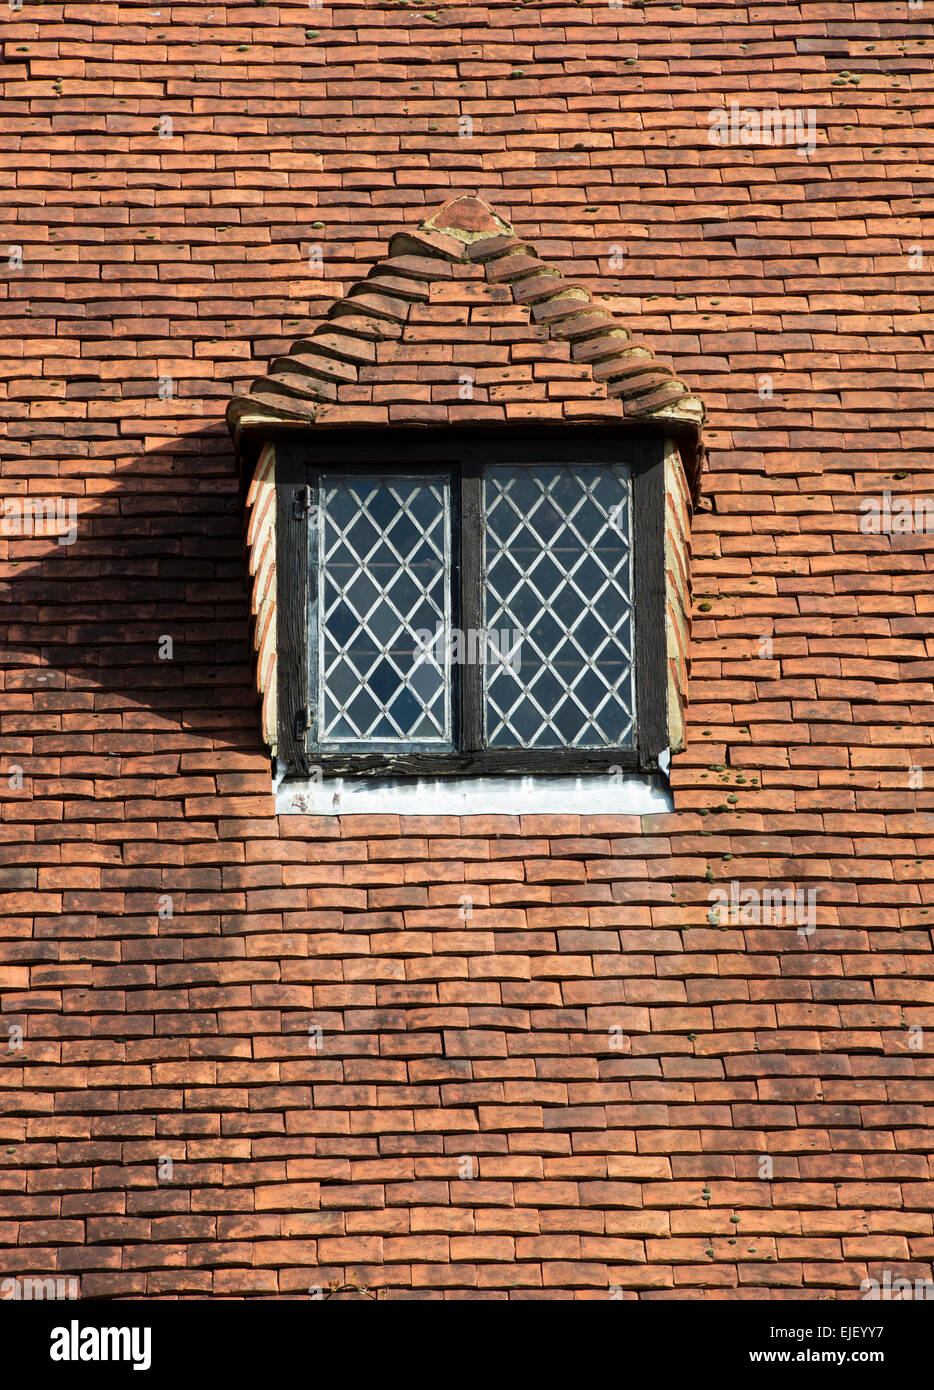 RHS Wisley laboratory Dormer window and roof tiles. Surrey, England Stock Photo